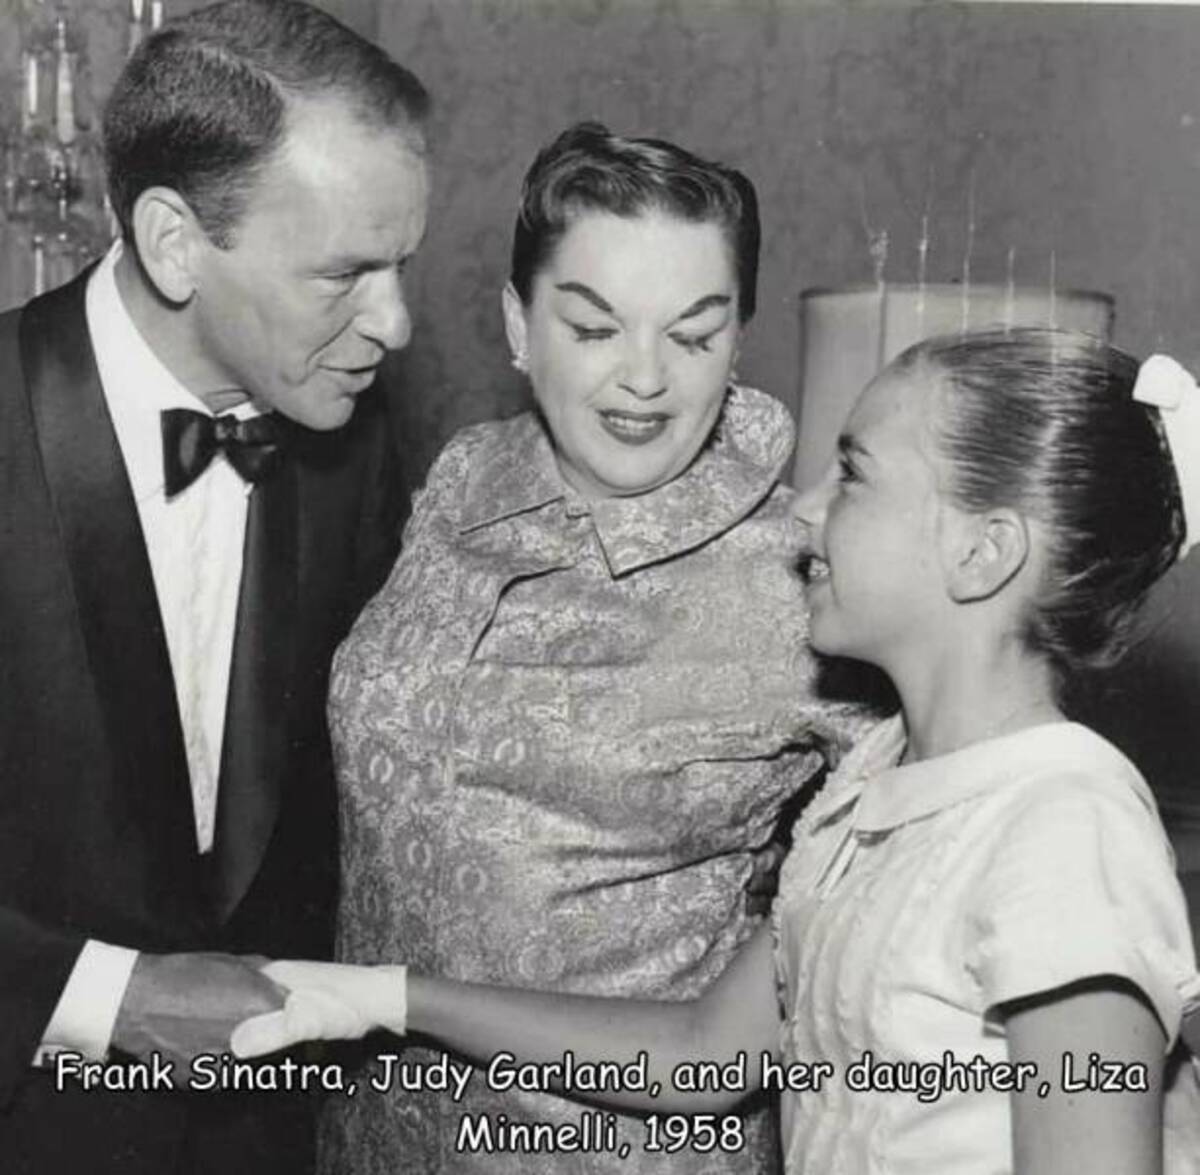 judy garland and frank sinatra - Frank Sinatra, Judy Garland, and her daughter, Liza Minnelli, 1958